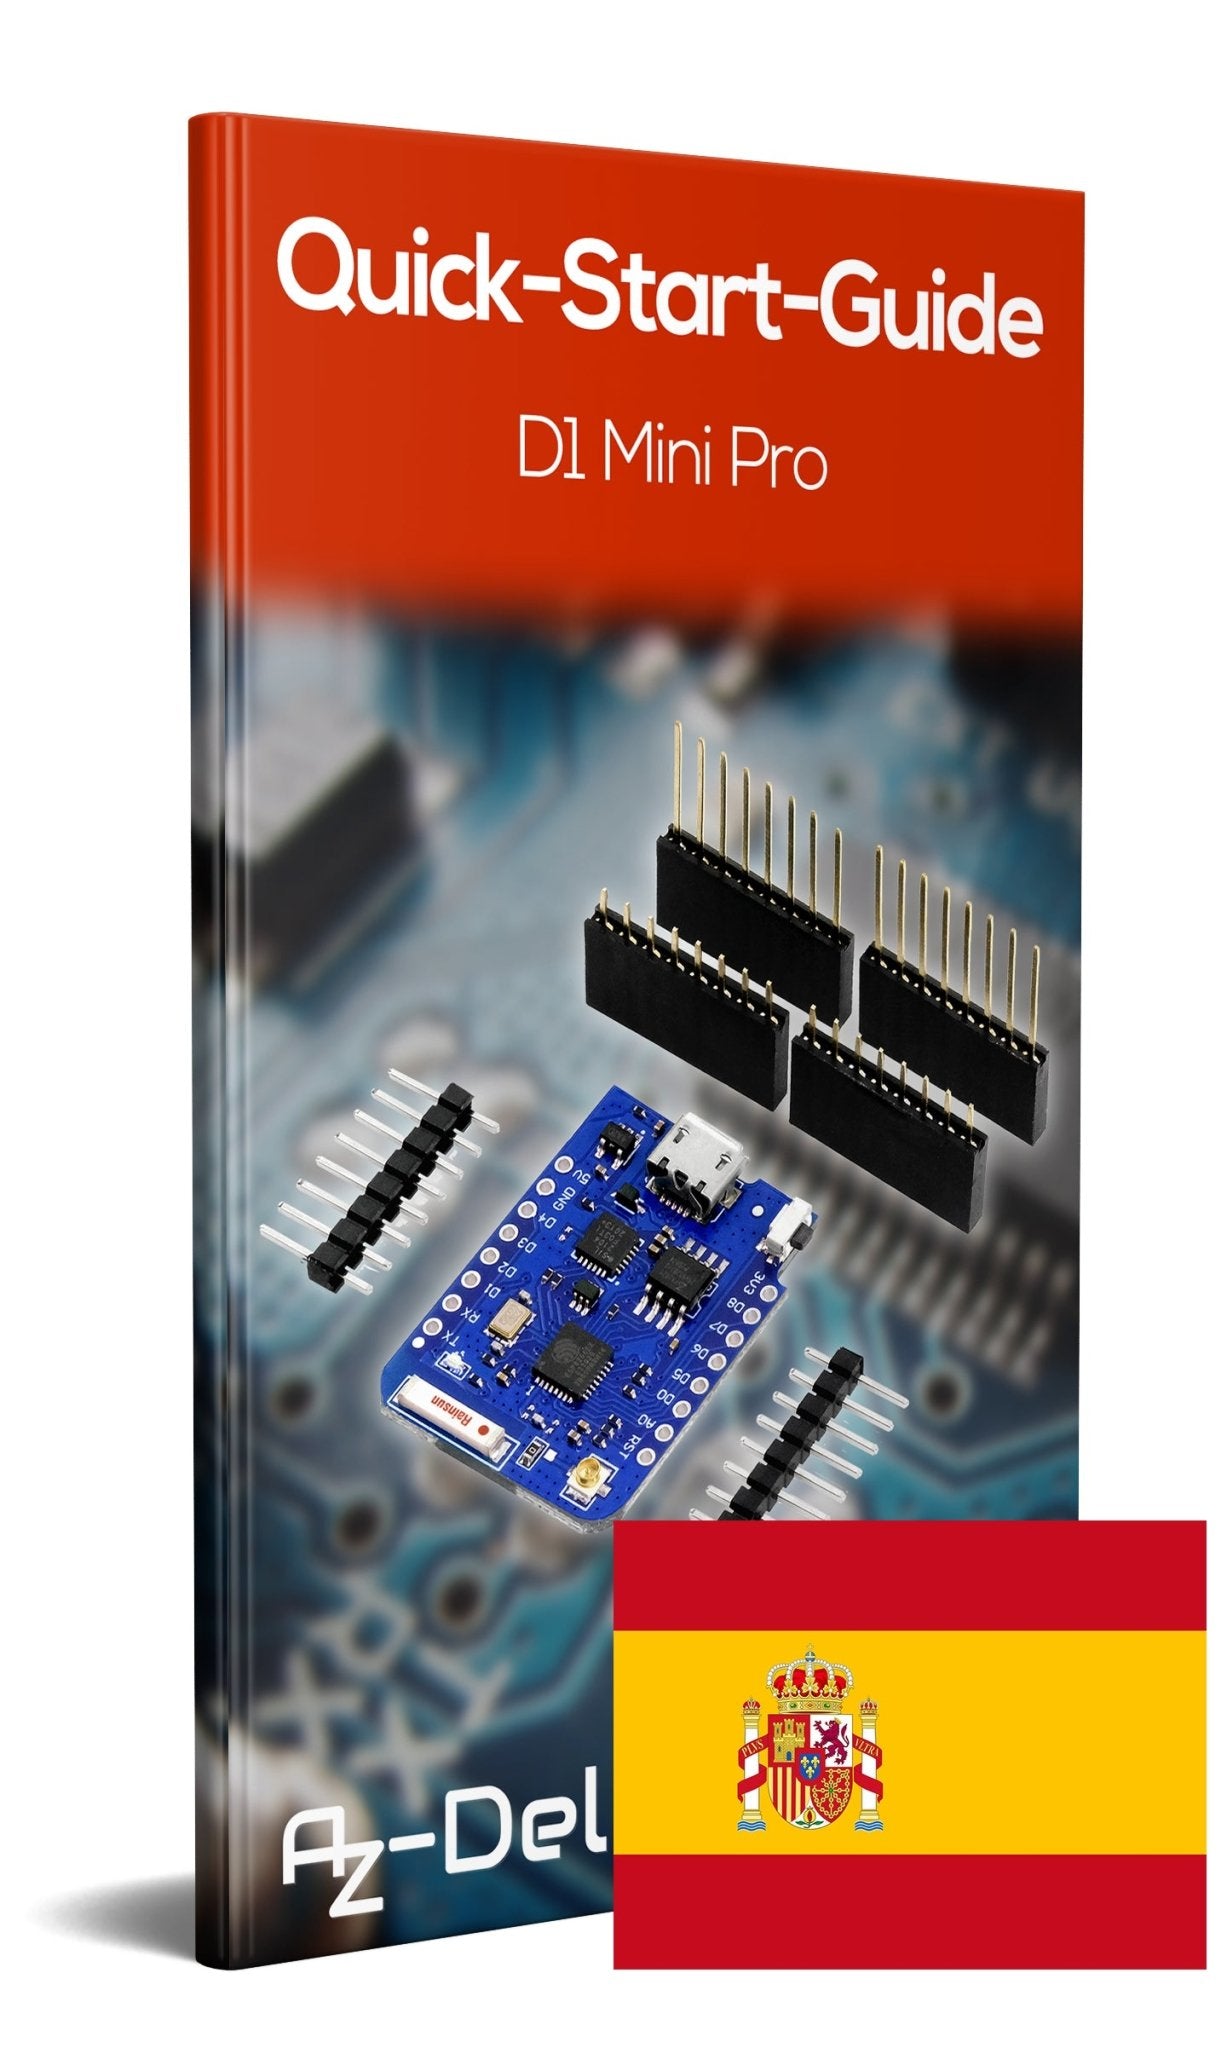 D1 Mini Pro ESP8266 ESP-8266EX CP2104 WIFI Entwicklungboard - AZ-Delivery